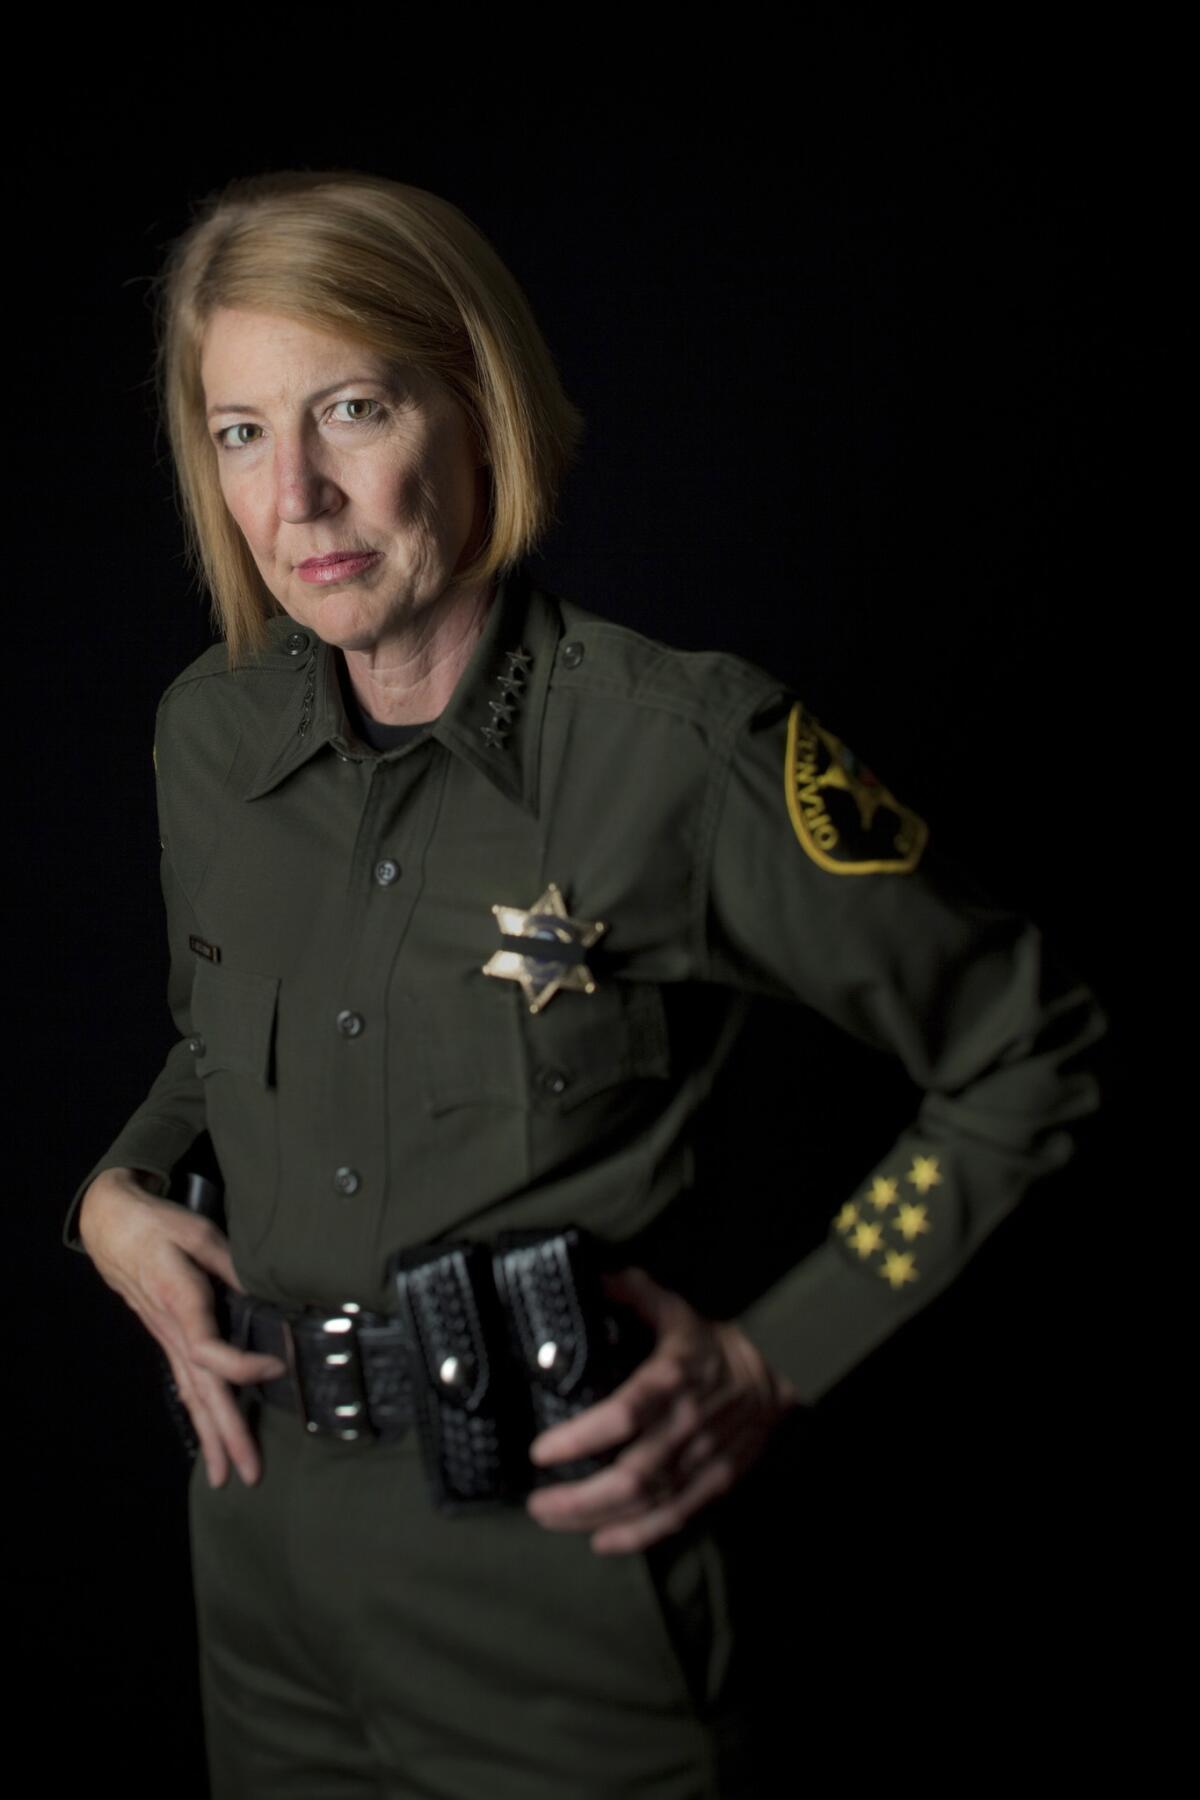 Sandra Hutchens as Orange County sheriff in 2017.